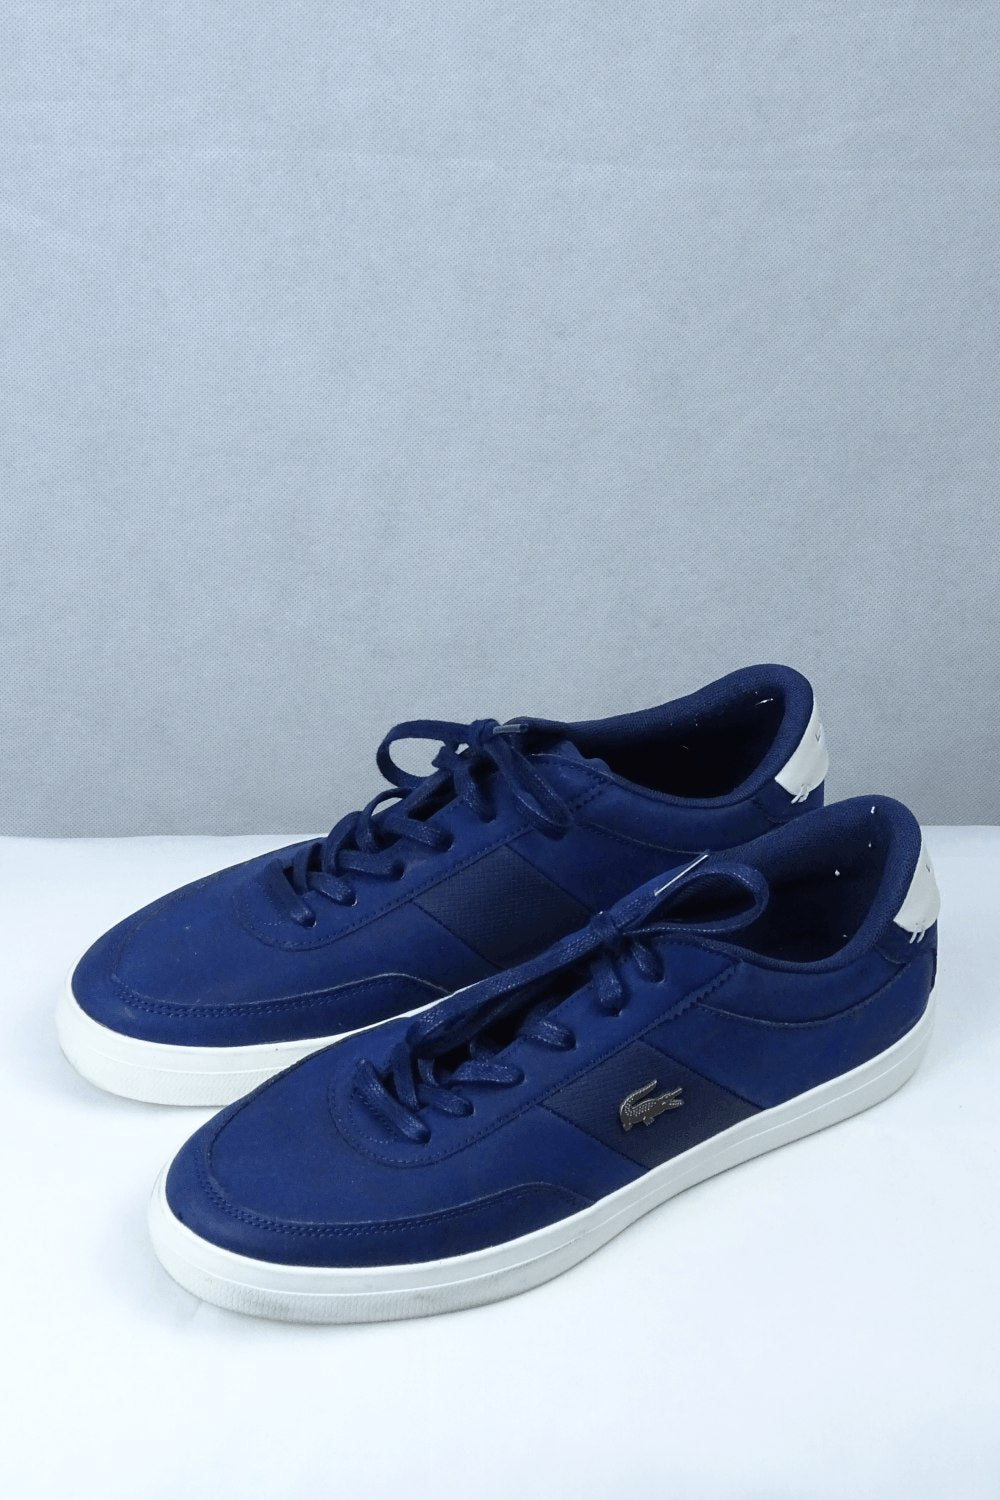 Lacost Blue Sneakers 7UK (AU 9)